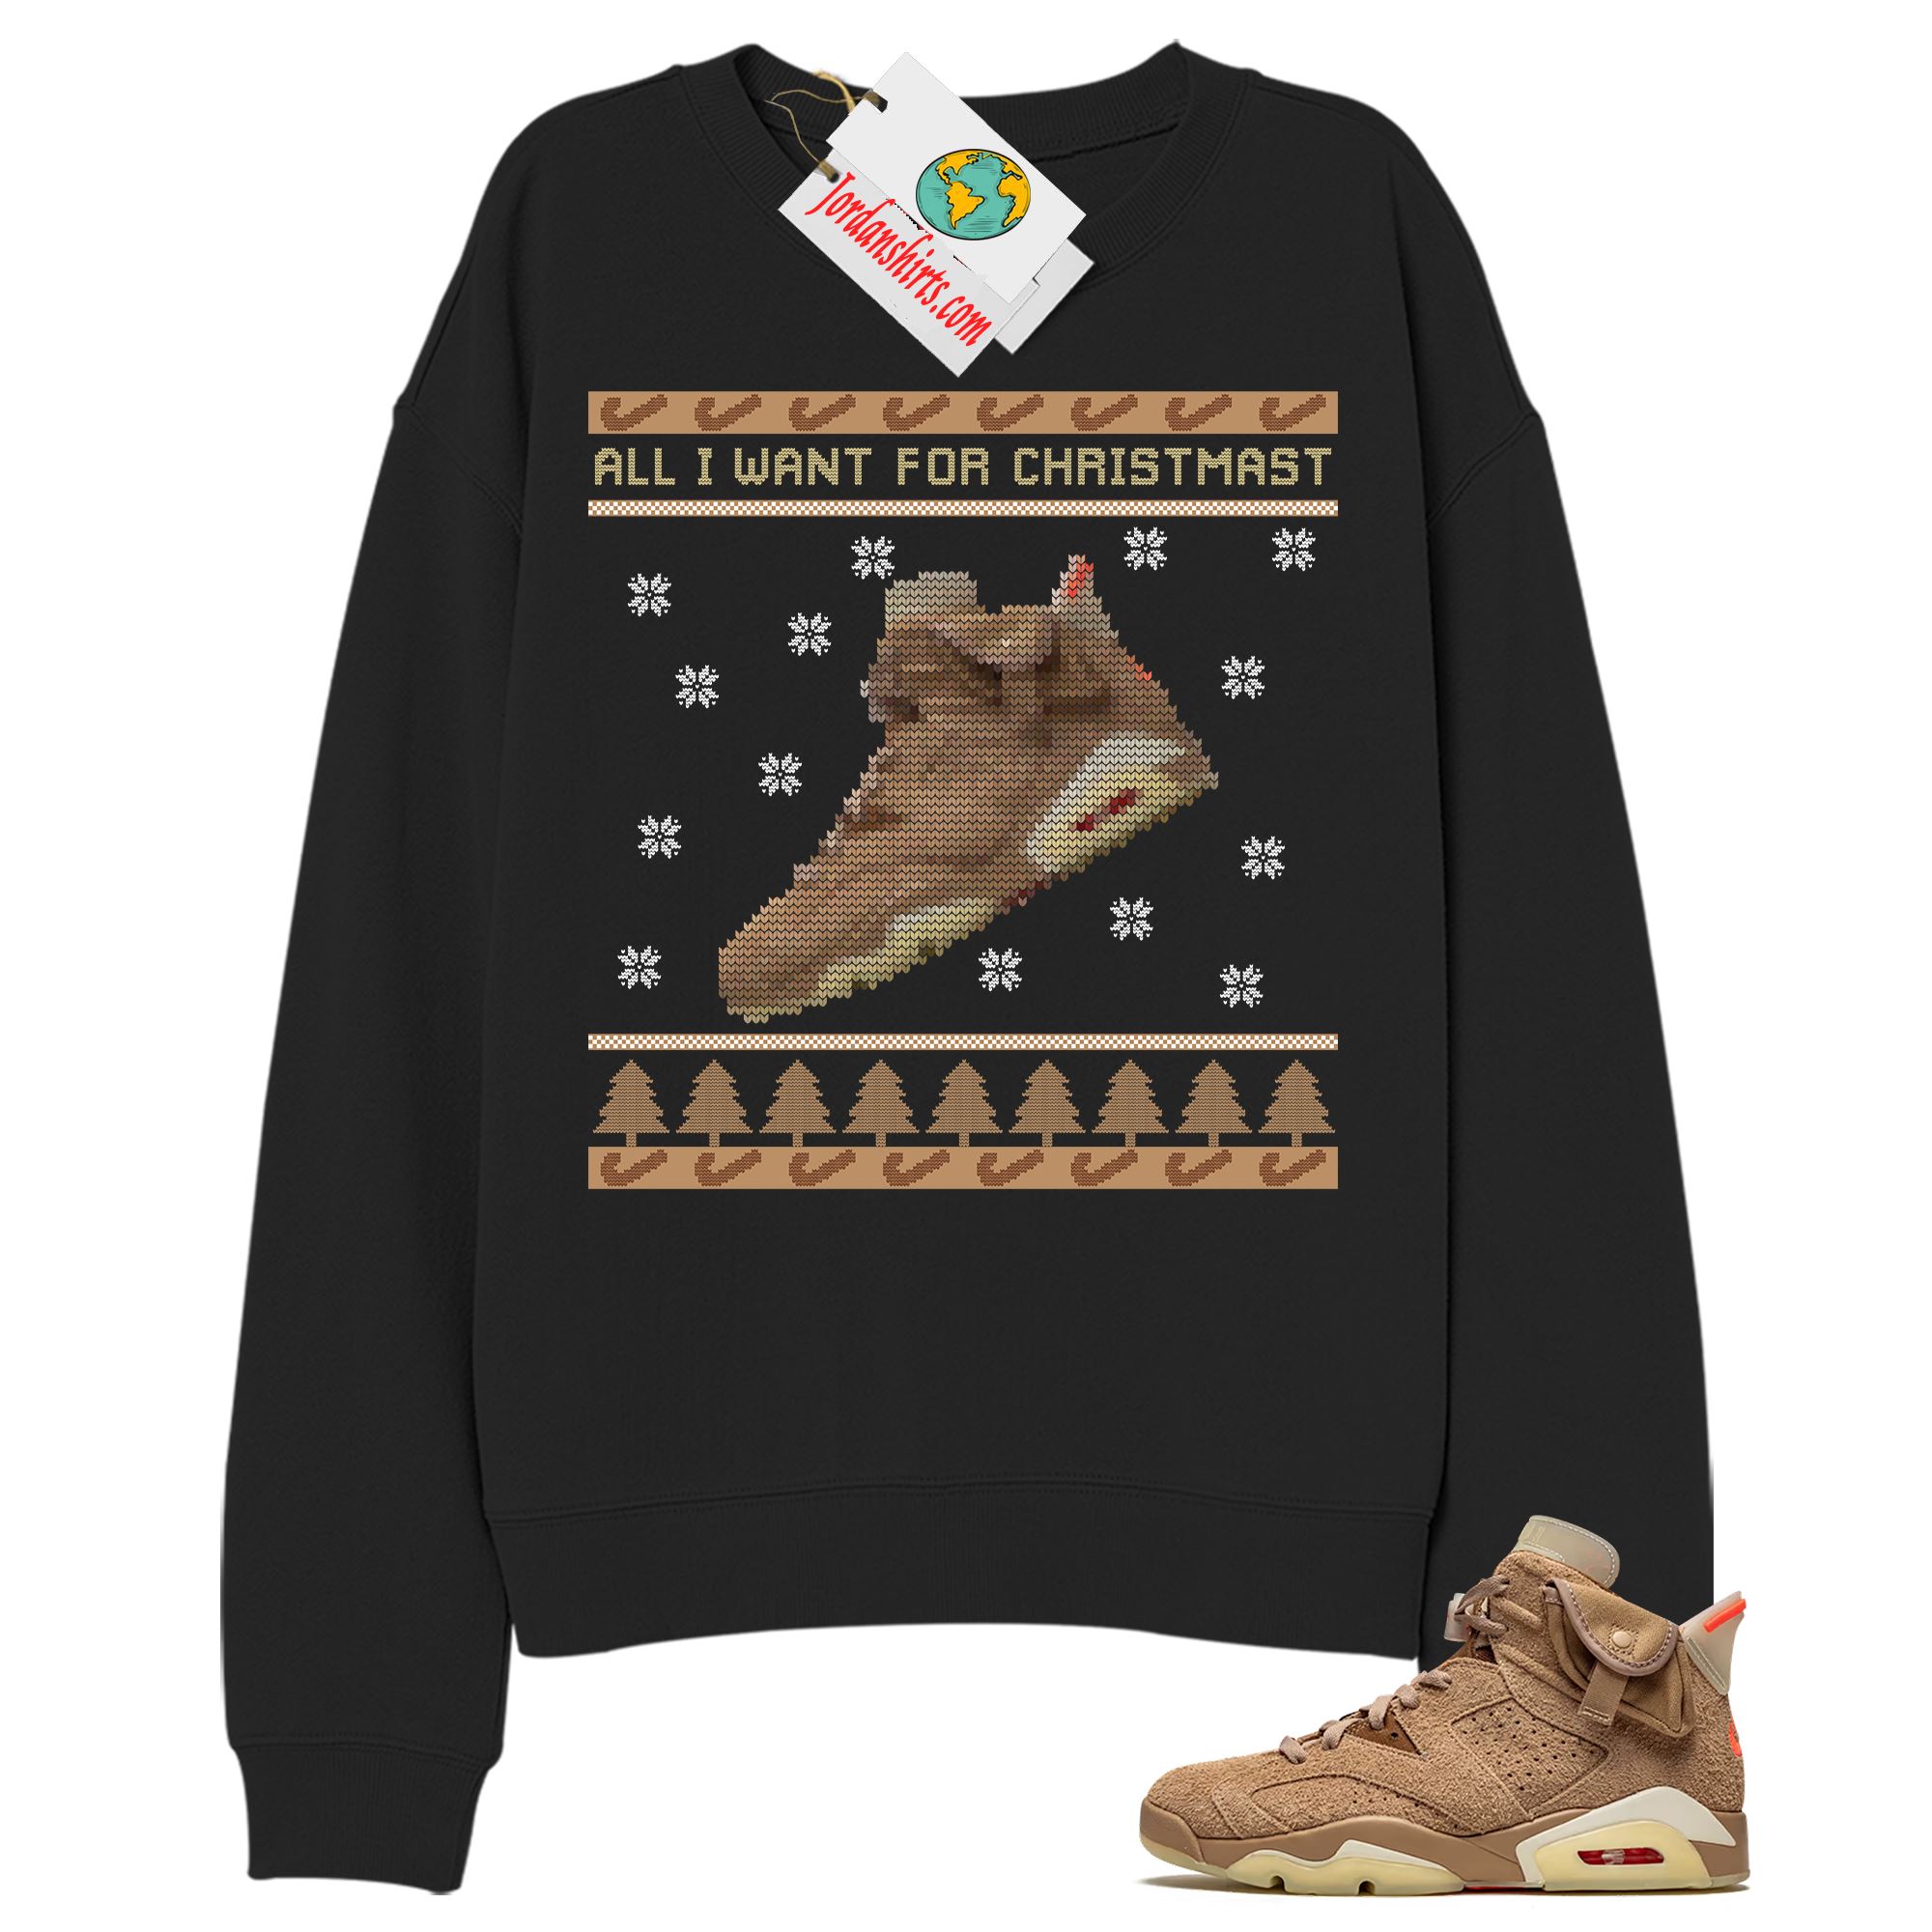 Jordan 6 Sweatshirt, Sneaker Ugly Christmas Shirt Black Sweatshirt Air Jordan 6 Travis Scott 6s Full Size Up To 5xl